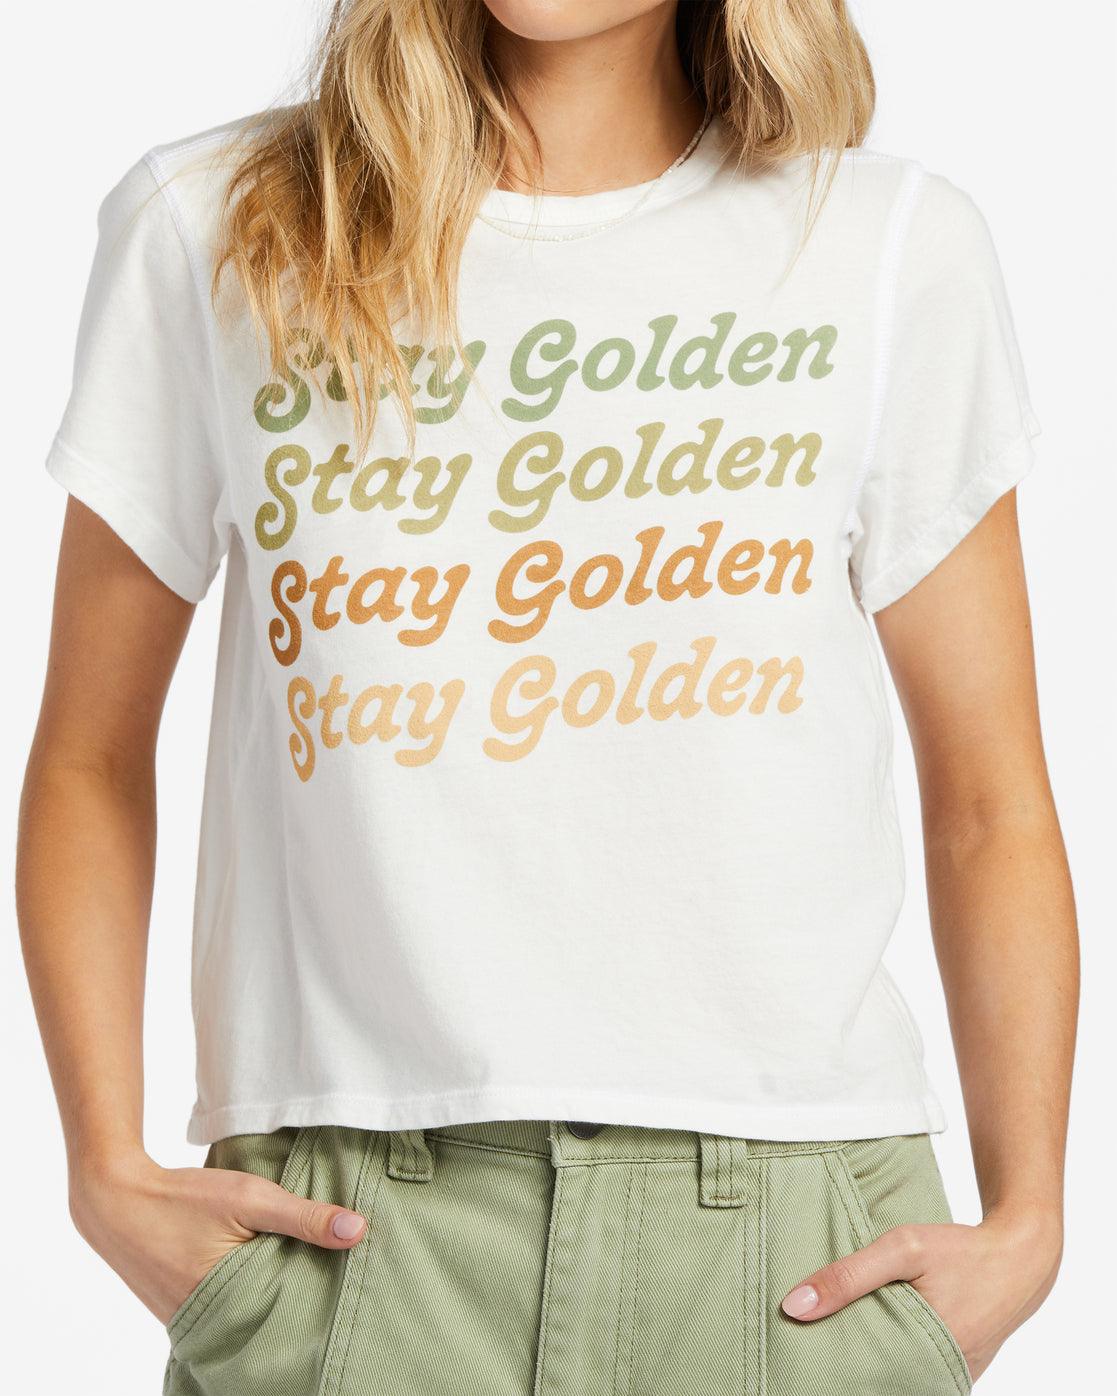 Stay Golden T-Shirt - SoHa Surf Shop